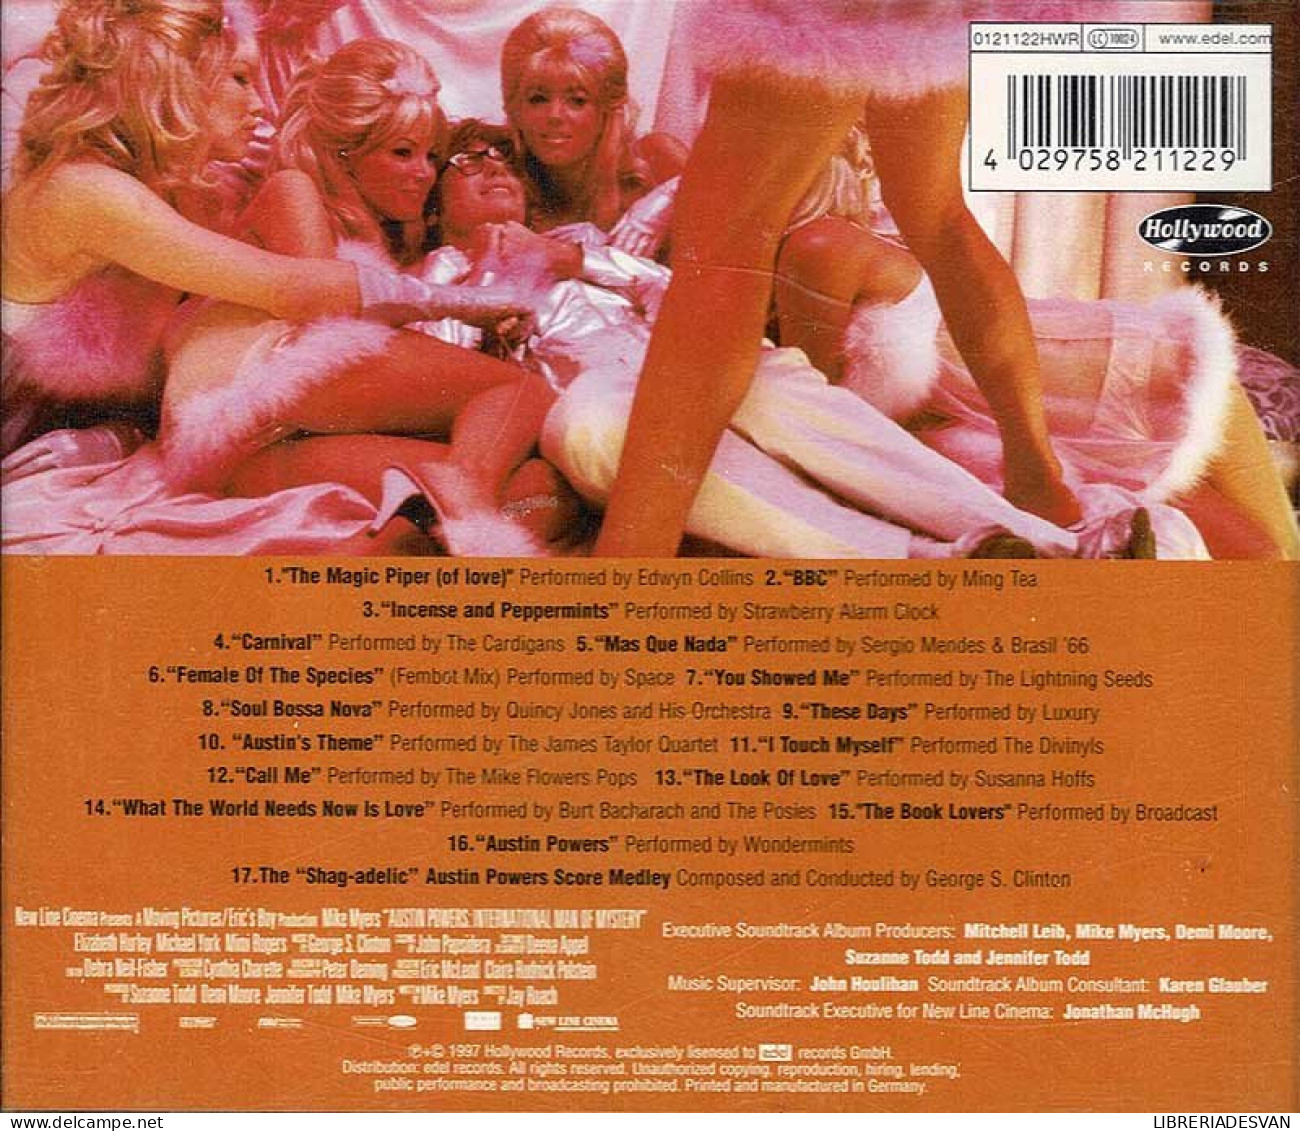 Austin Powers - International Man Of Mystery (Original Soundtrack). CD - Soundtracks, Film Music